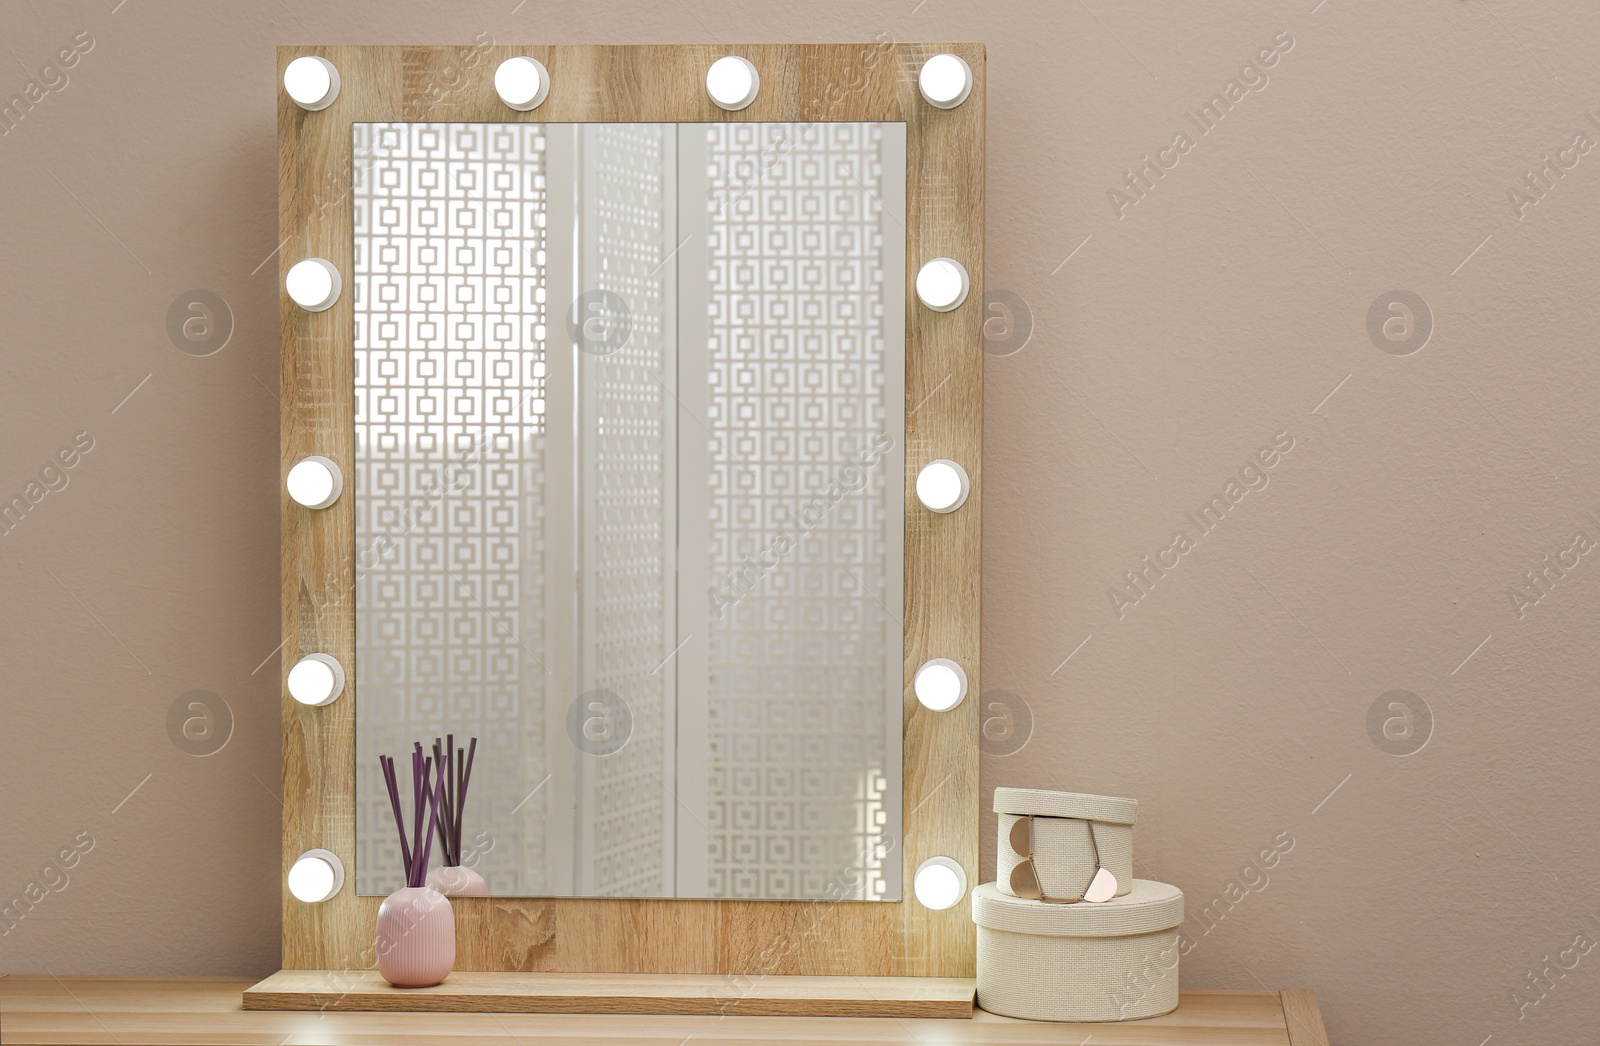 Photo of Stylish mirror with light bulbs near beige wall